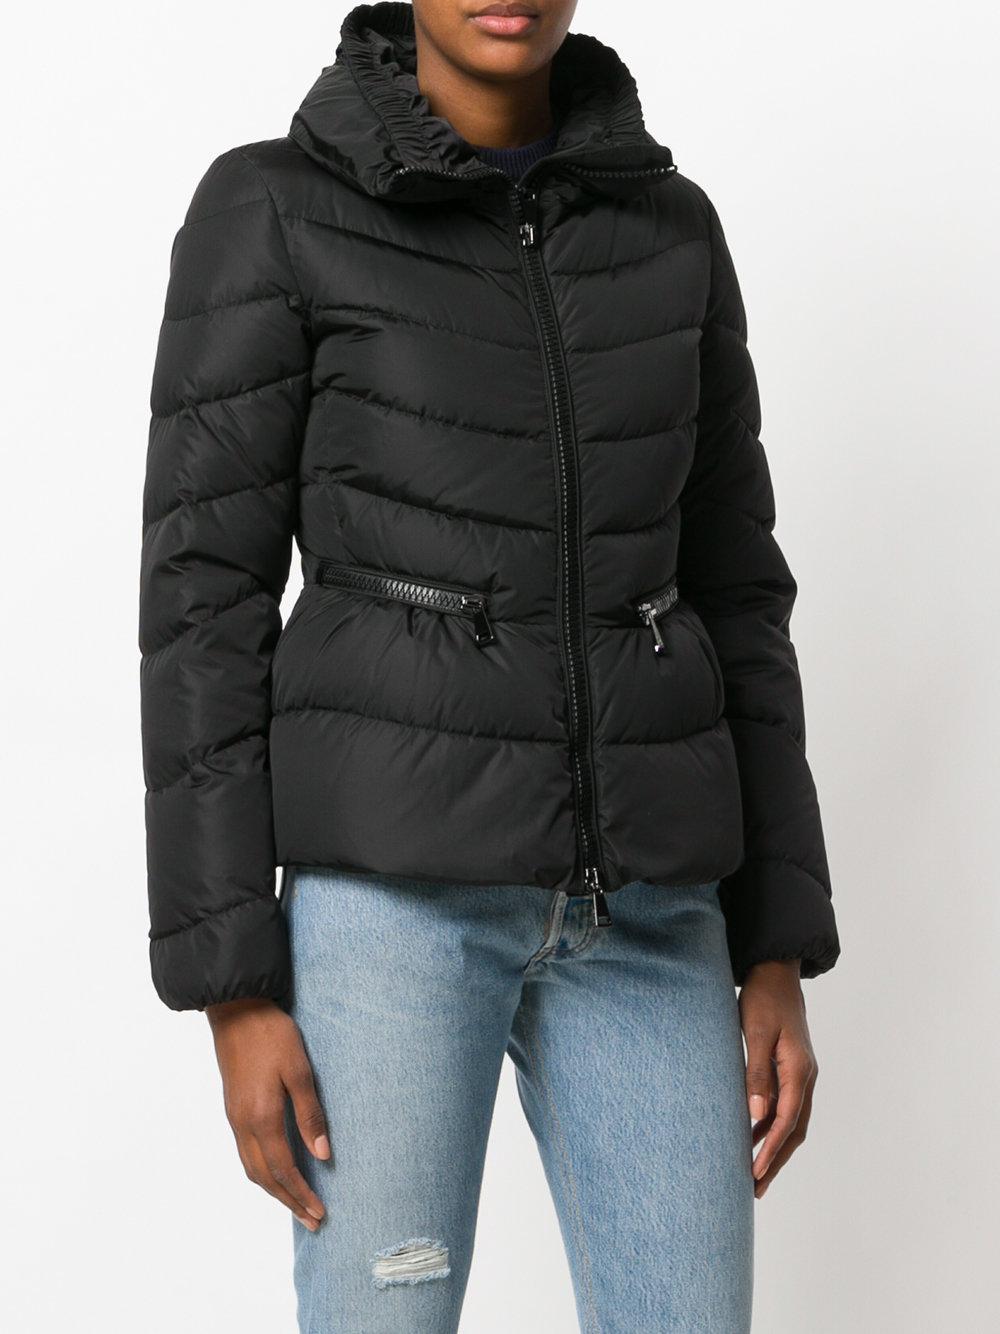 Lyst - Moncler Miriel Jacket in Black